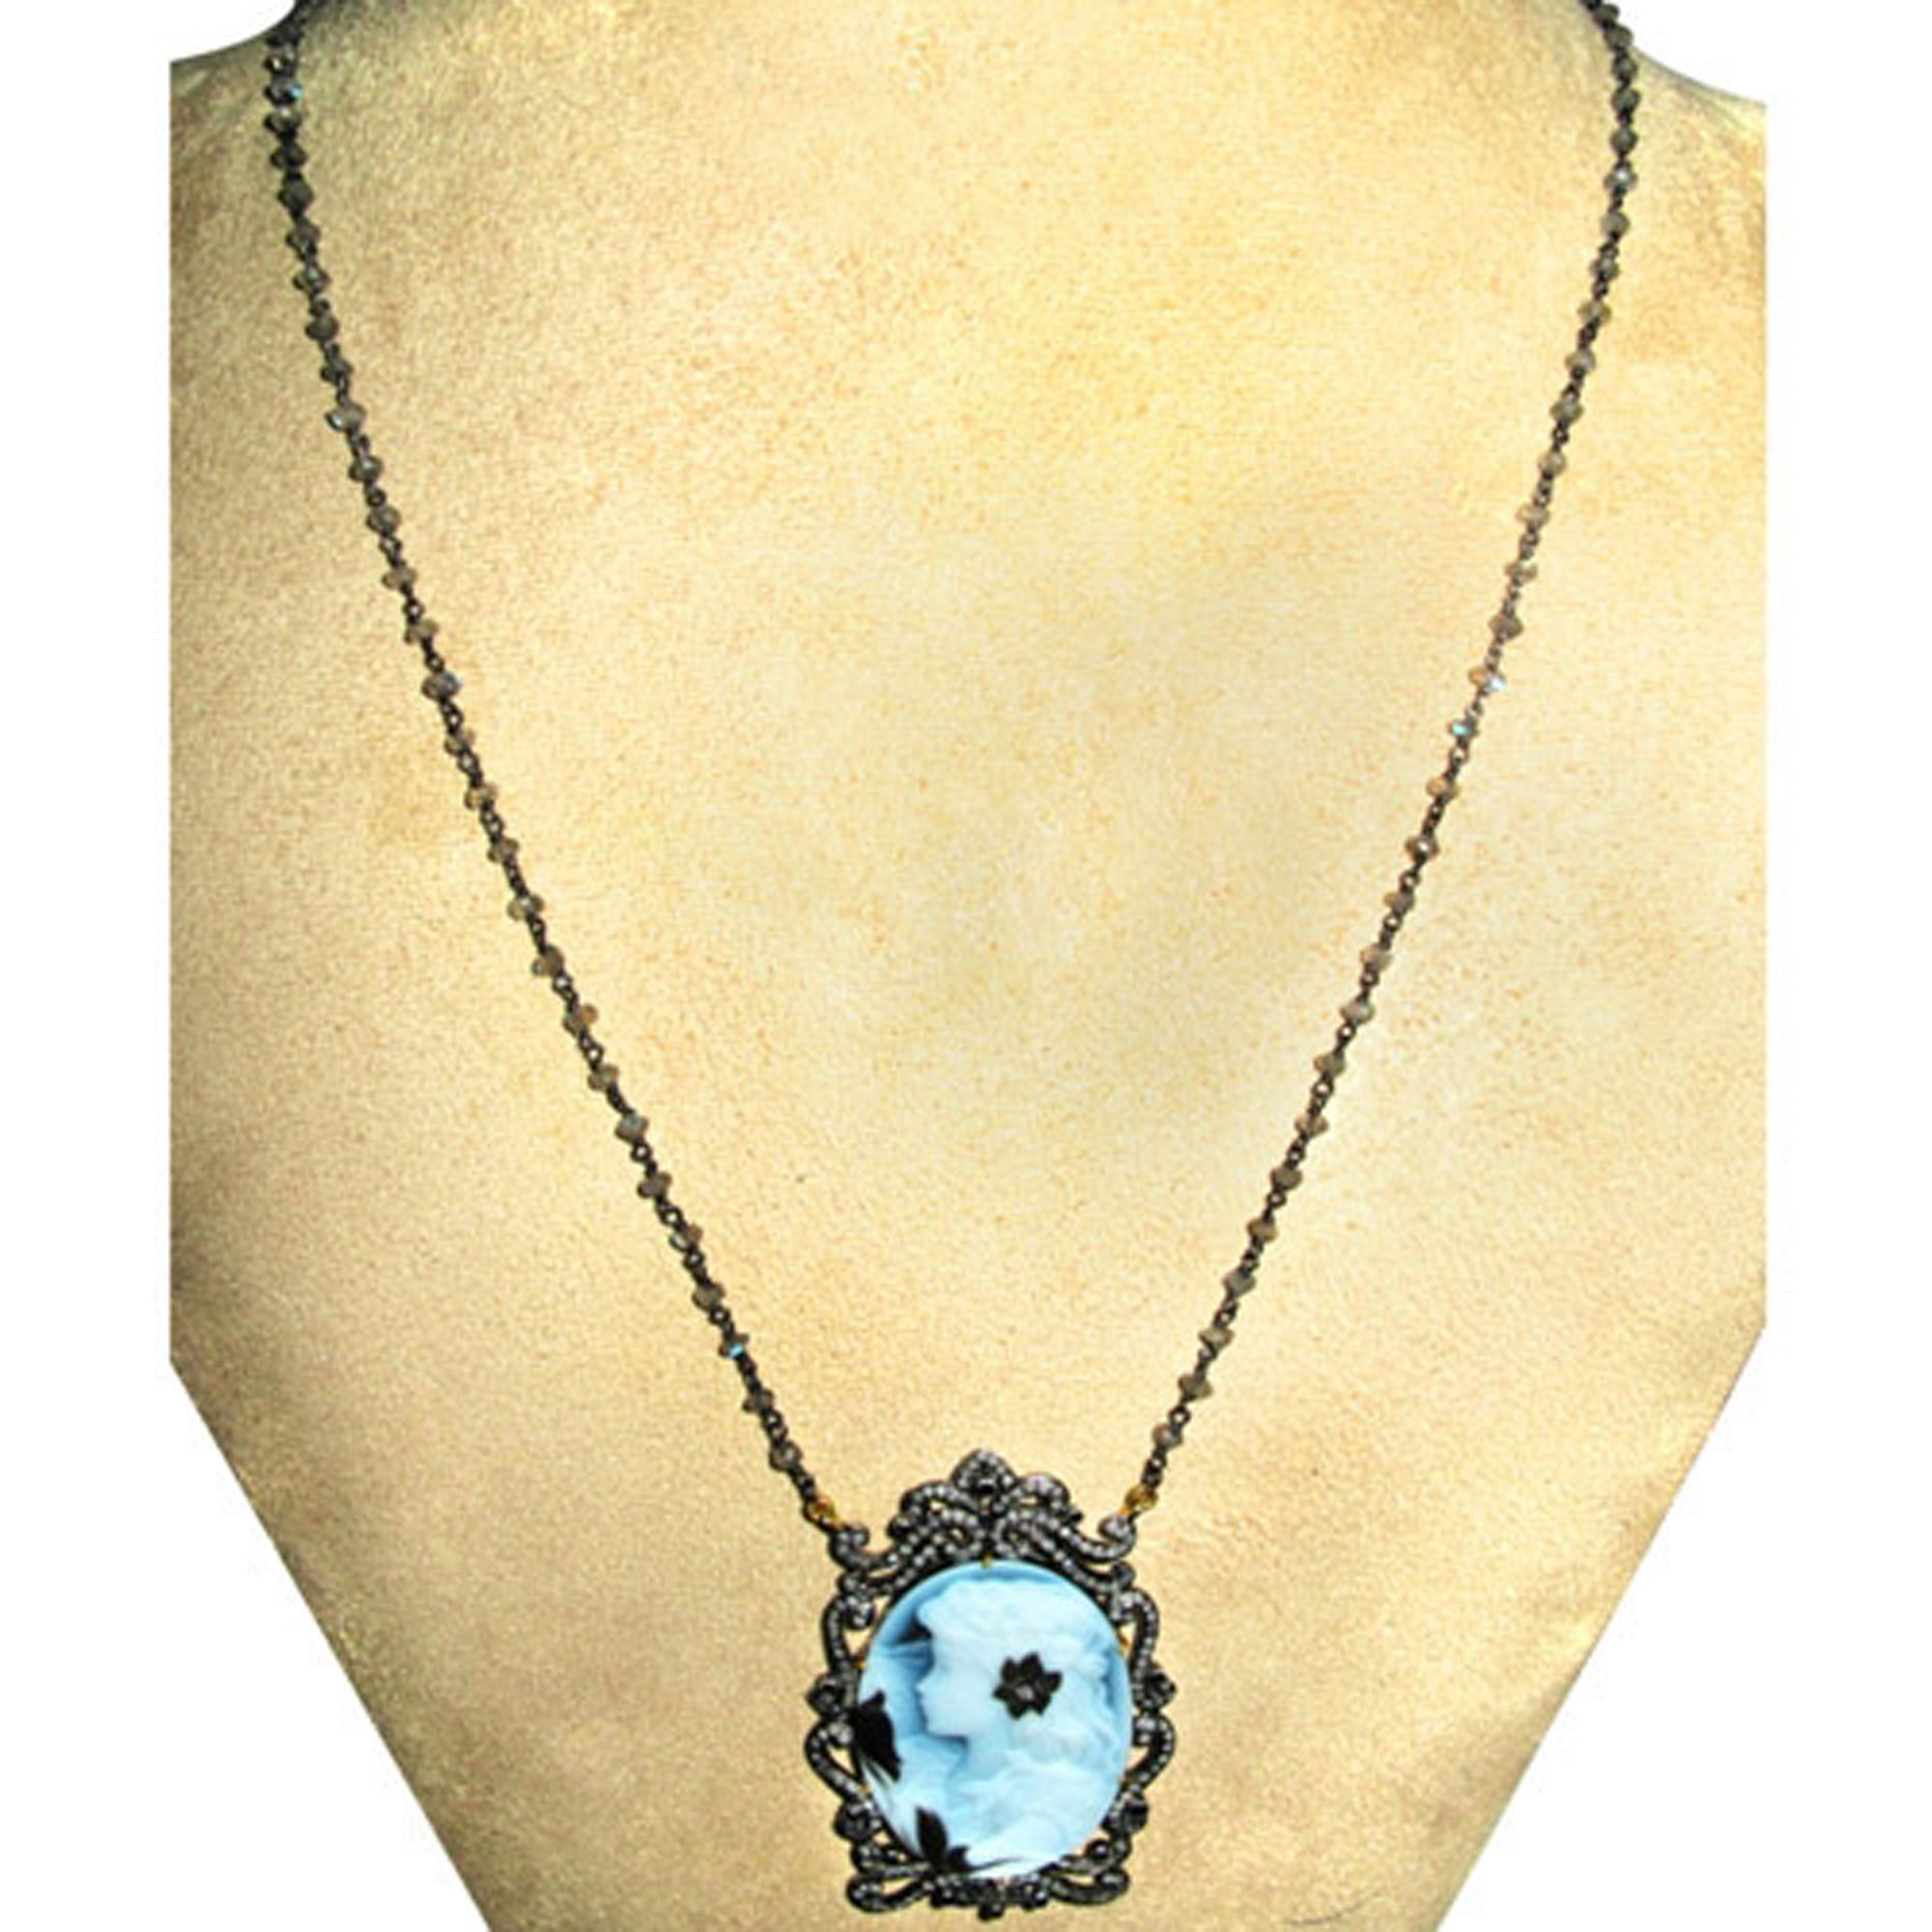 Cameo carving & labradorite beads vintage necklace